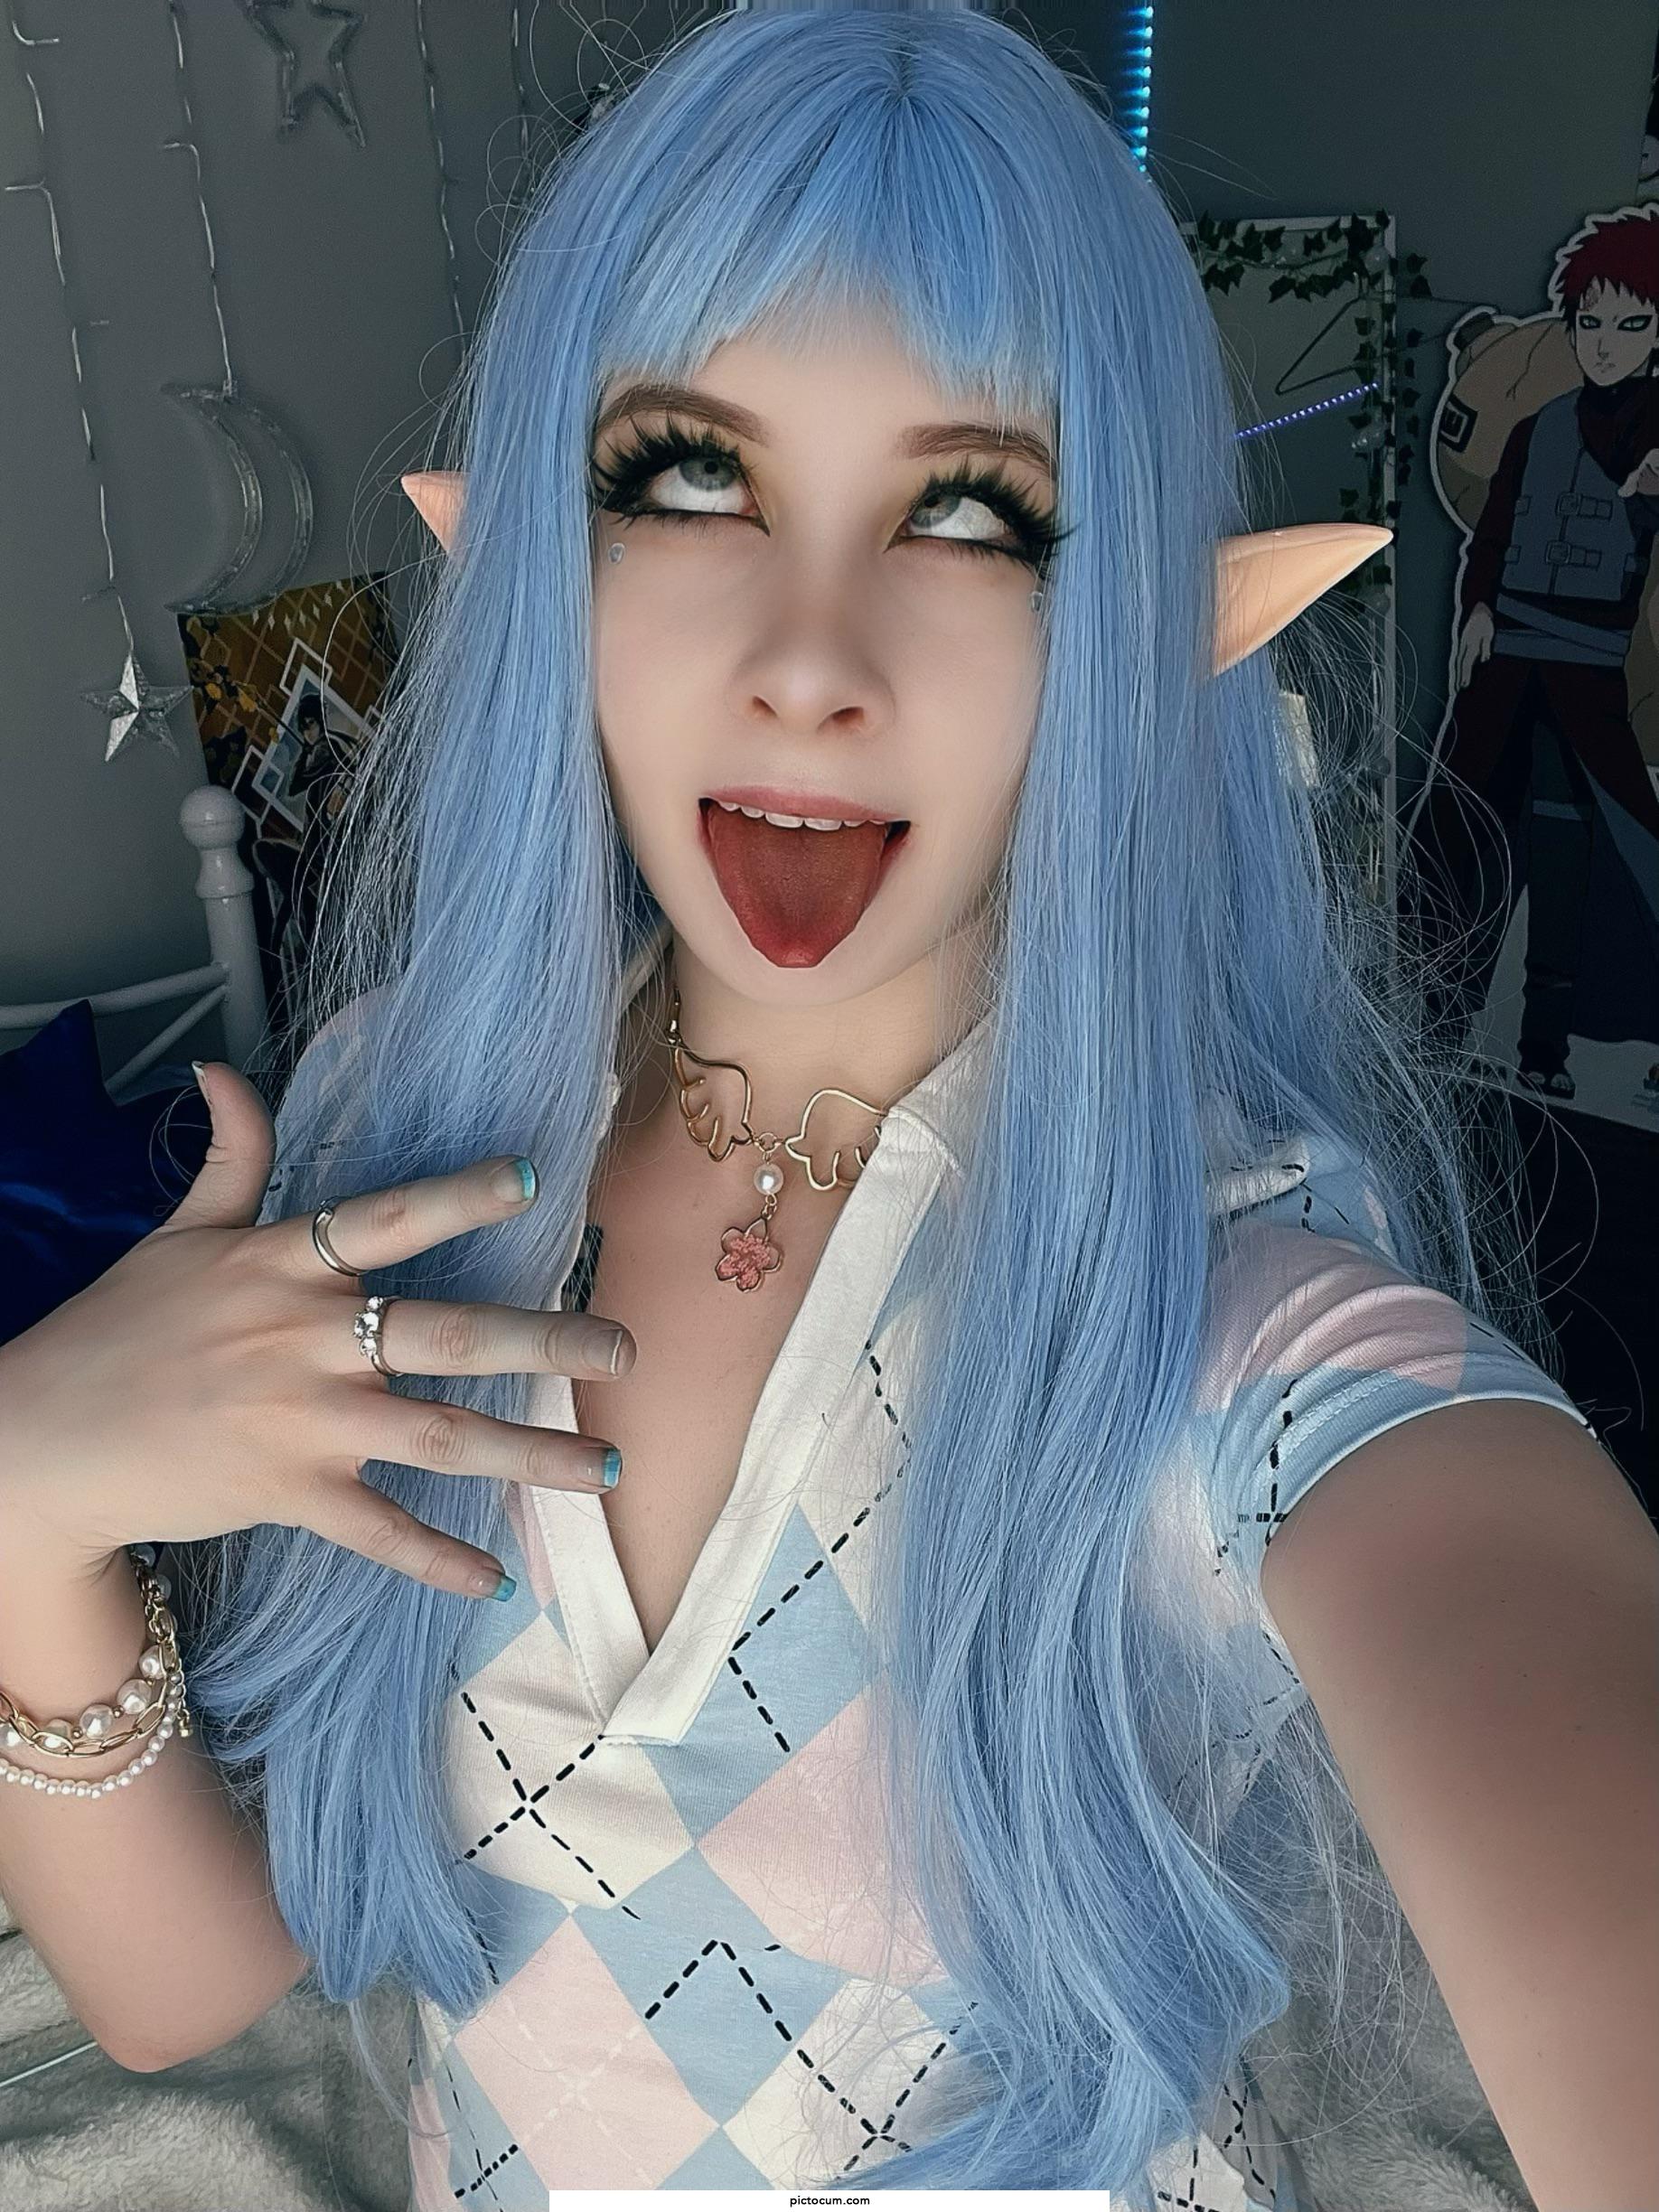 I hope you like blue haired horny elves